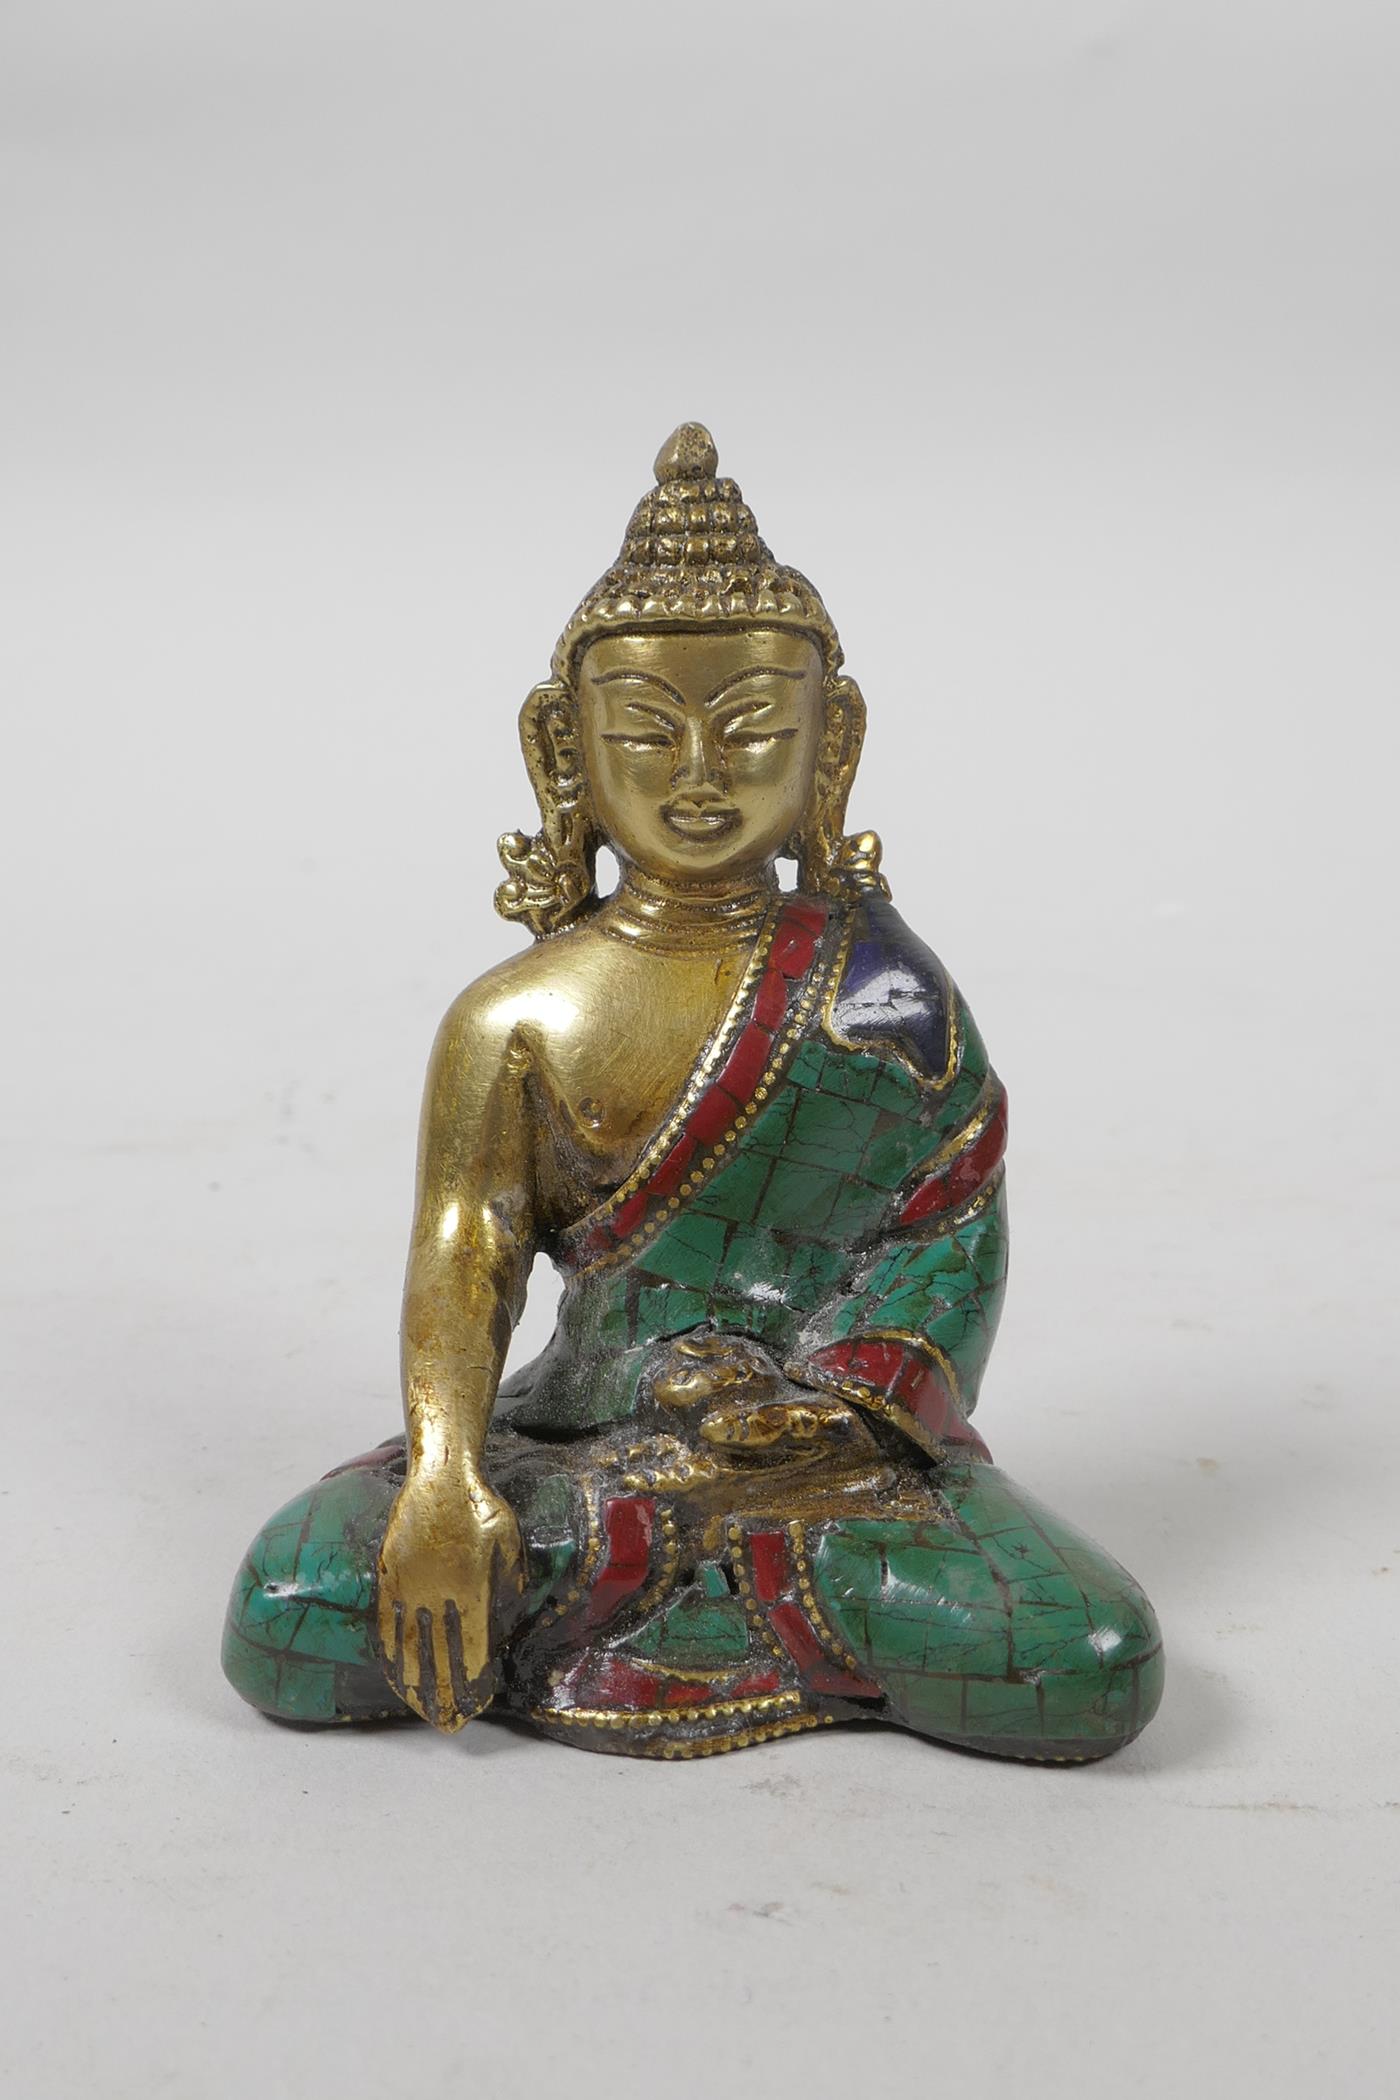 A Tibetan brass Buddha with a stone inset robe, 3" high